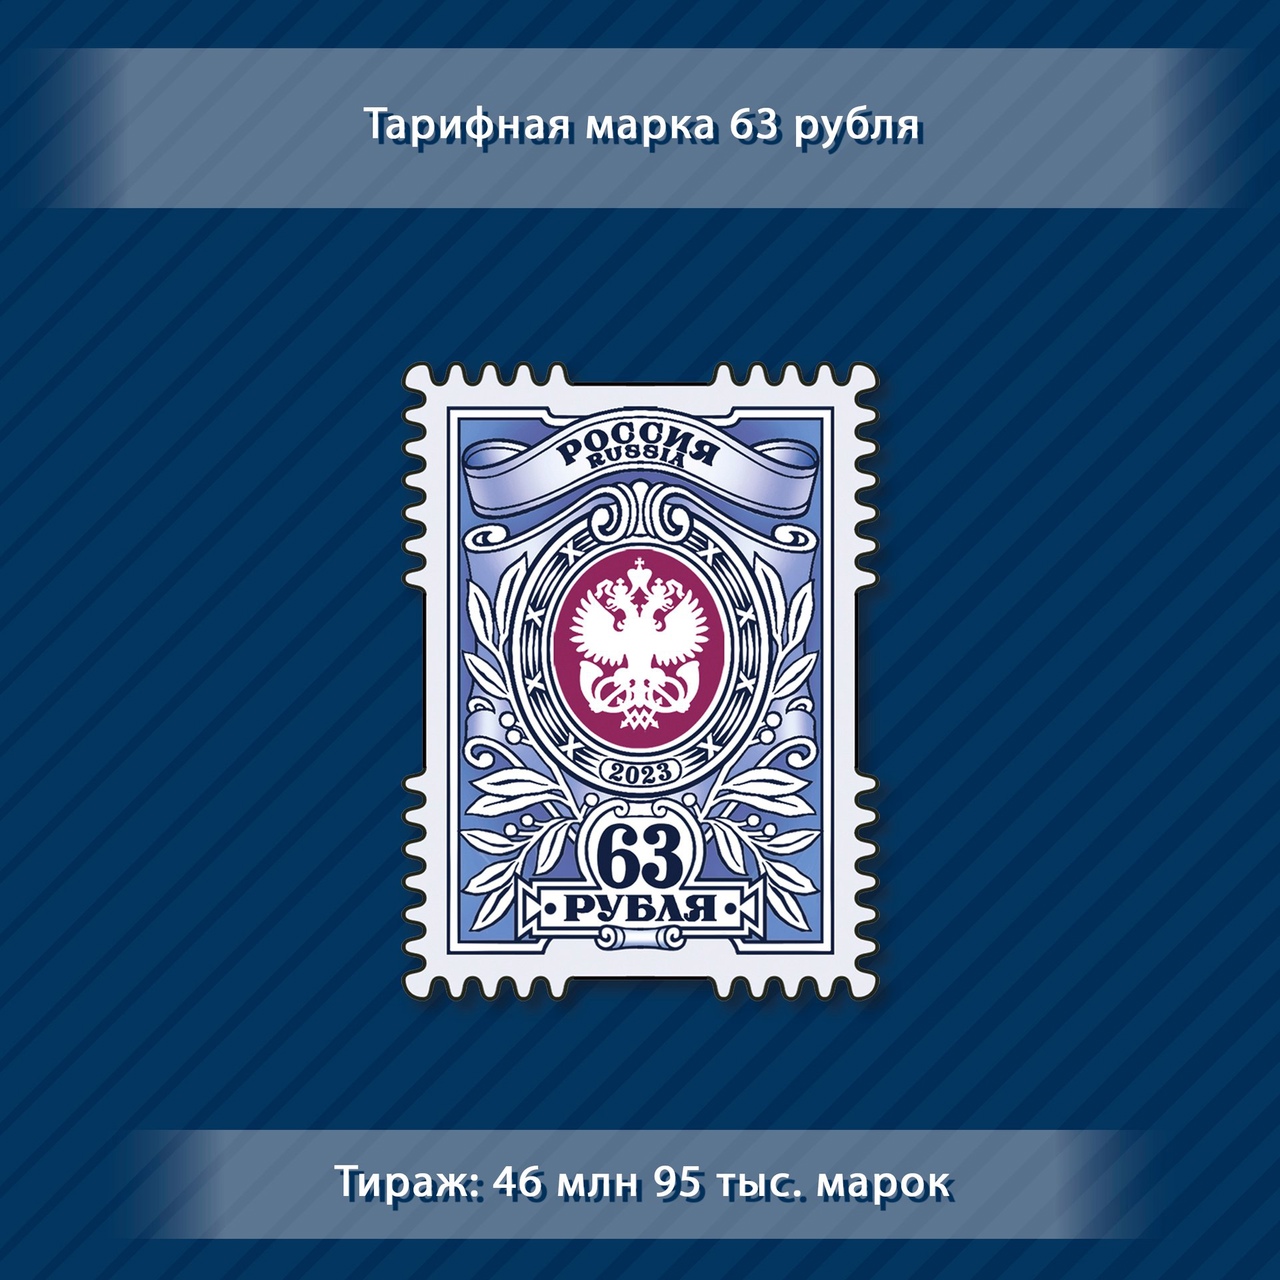 тарифная марка номиналом 63 рубля